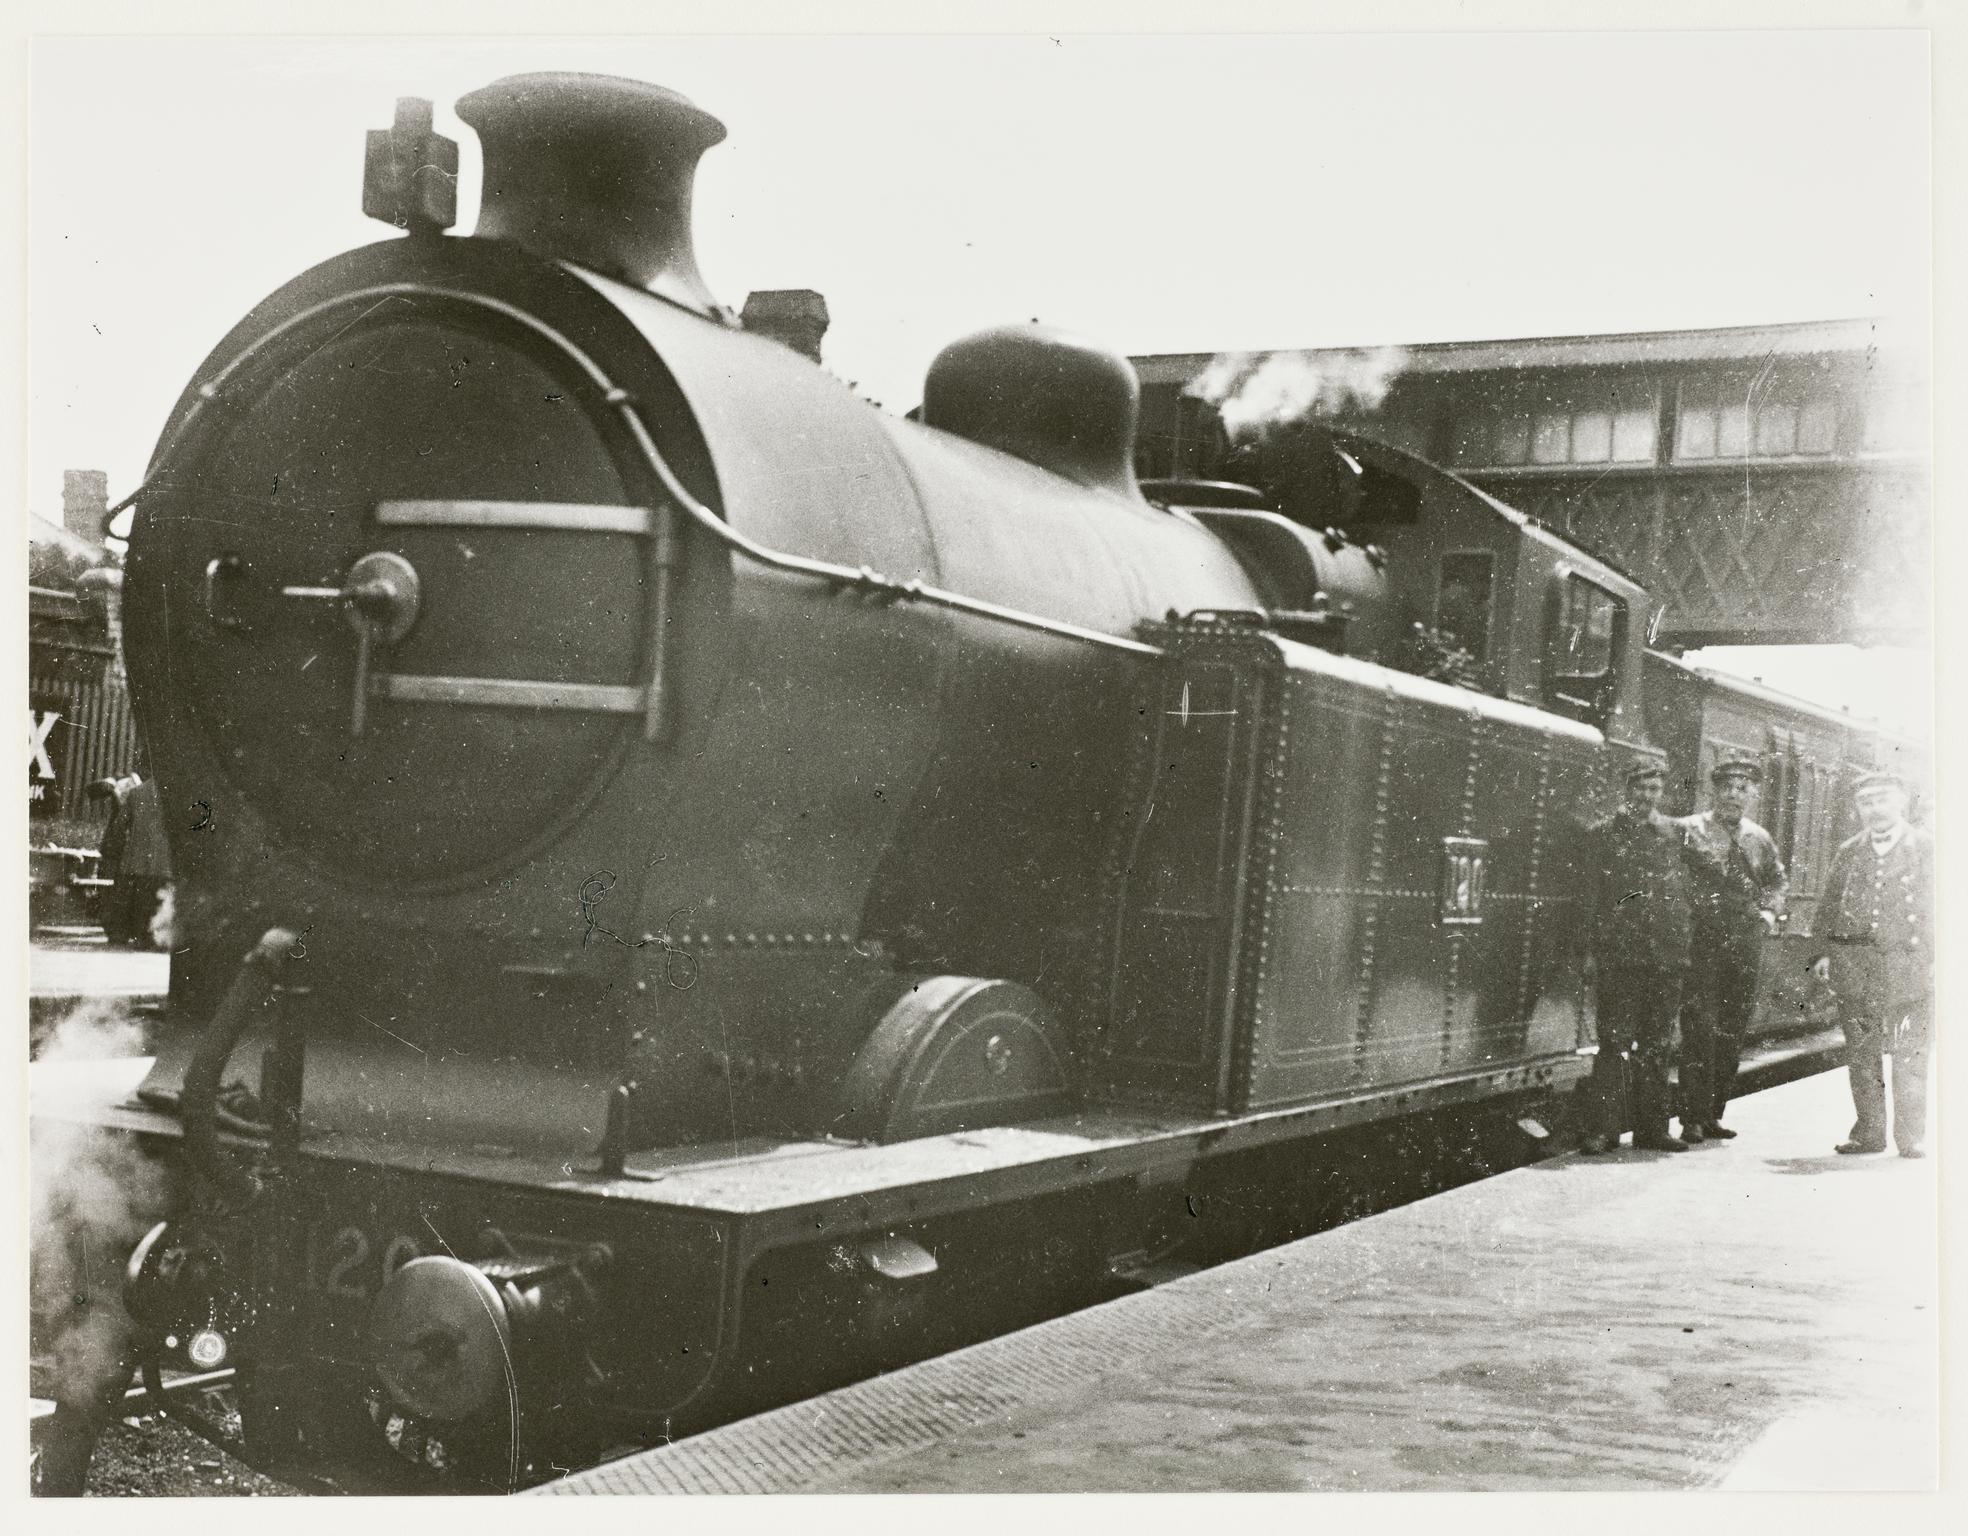 Taff Vale Railway locomotive, photograph